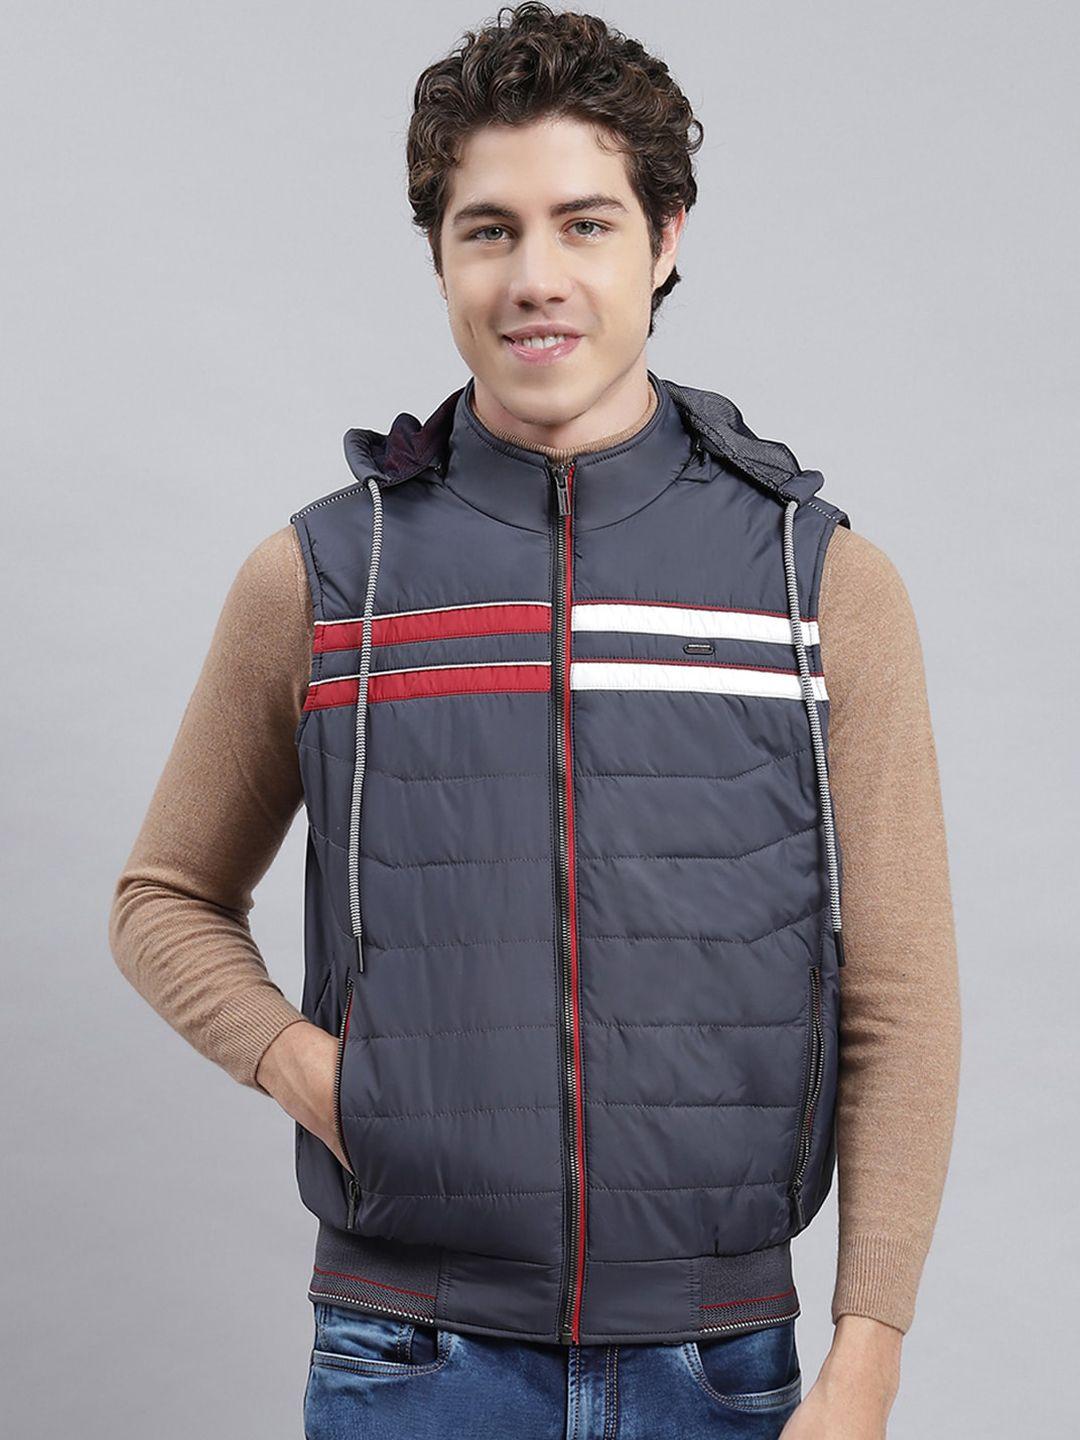 monte carlo striped lightweight puffer jacket